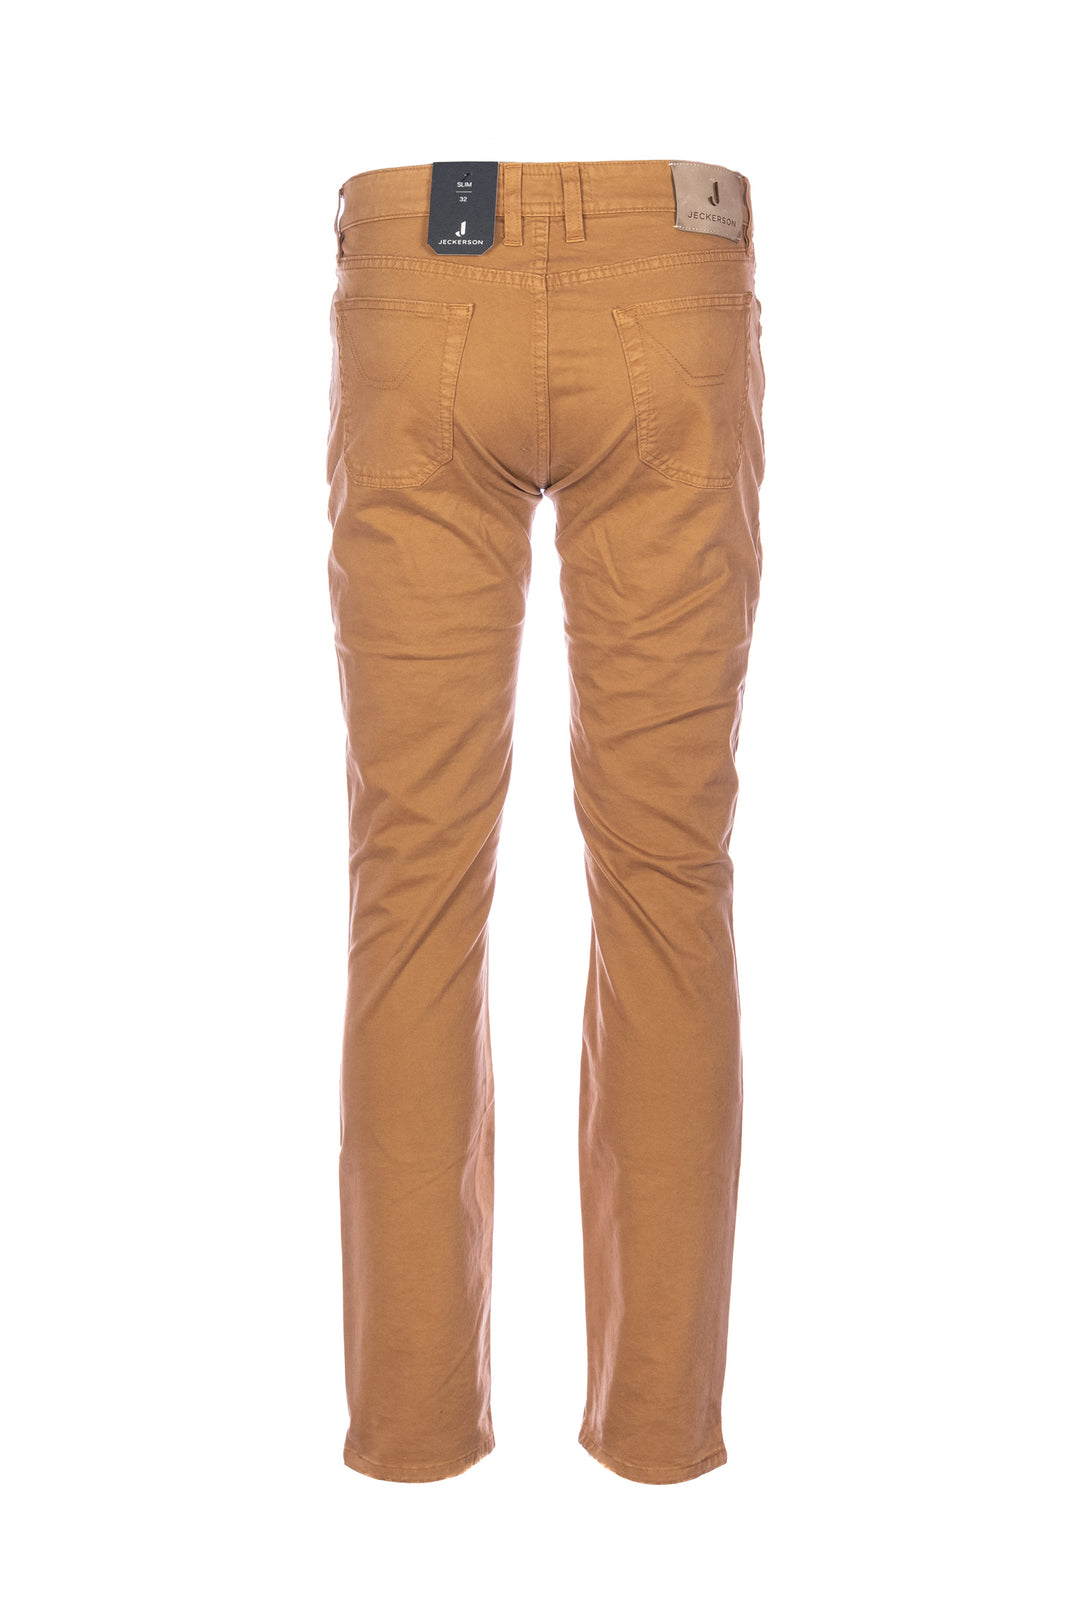 JECKERSON Pantalone slim 5 tasche “JORDAN” cammello in gabardina di cotone stretch - Mancinelli 1954